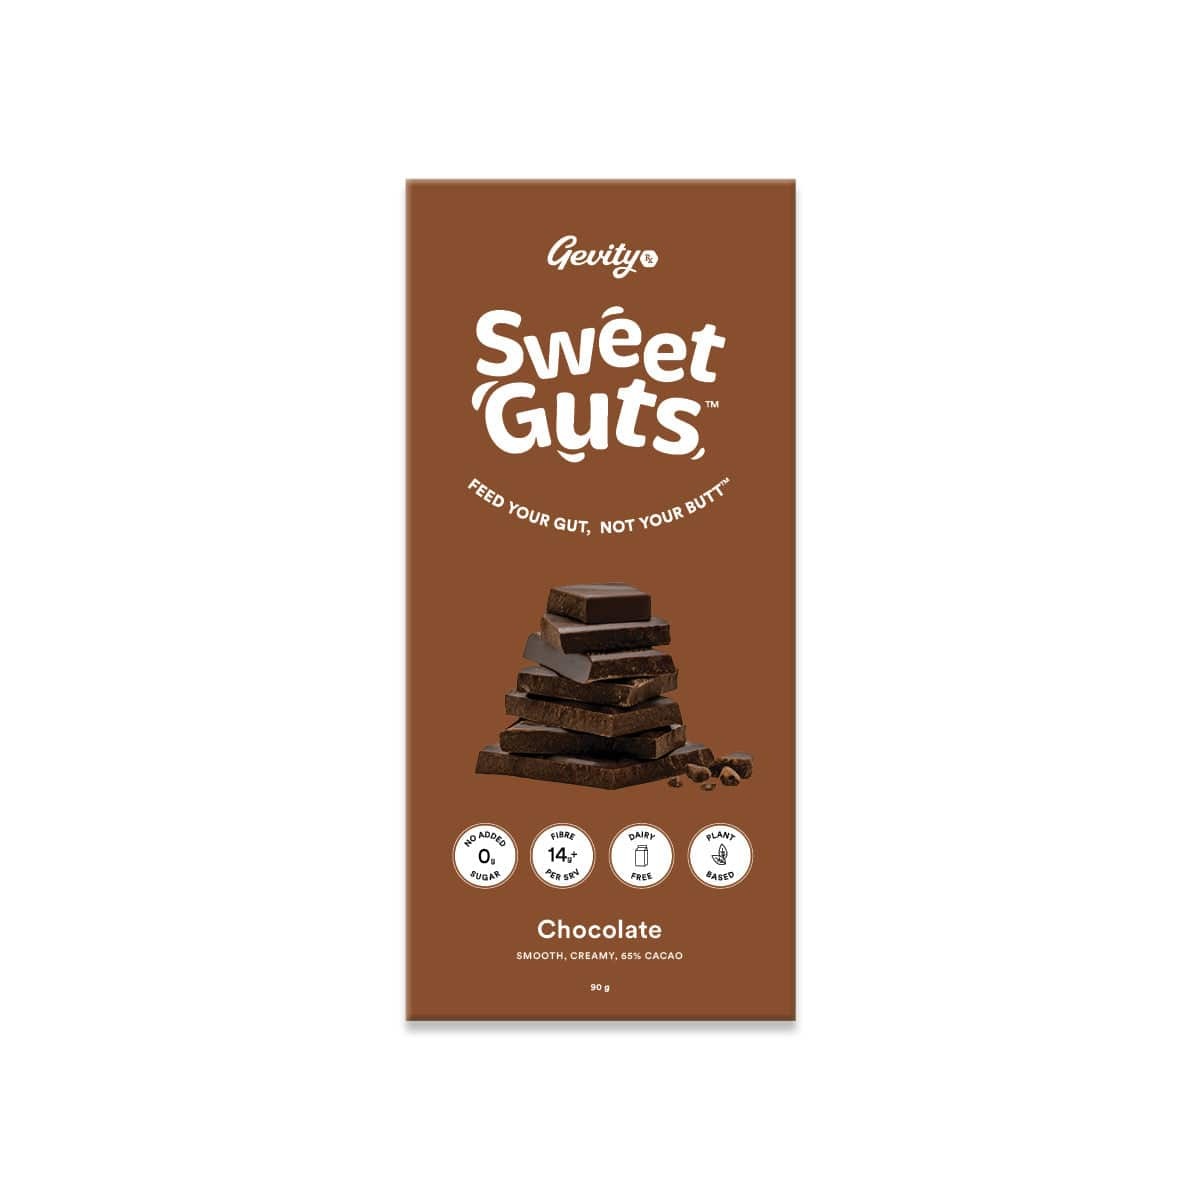 GevityRx Sweet Guts Chocolate 90g